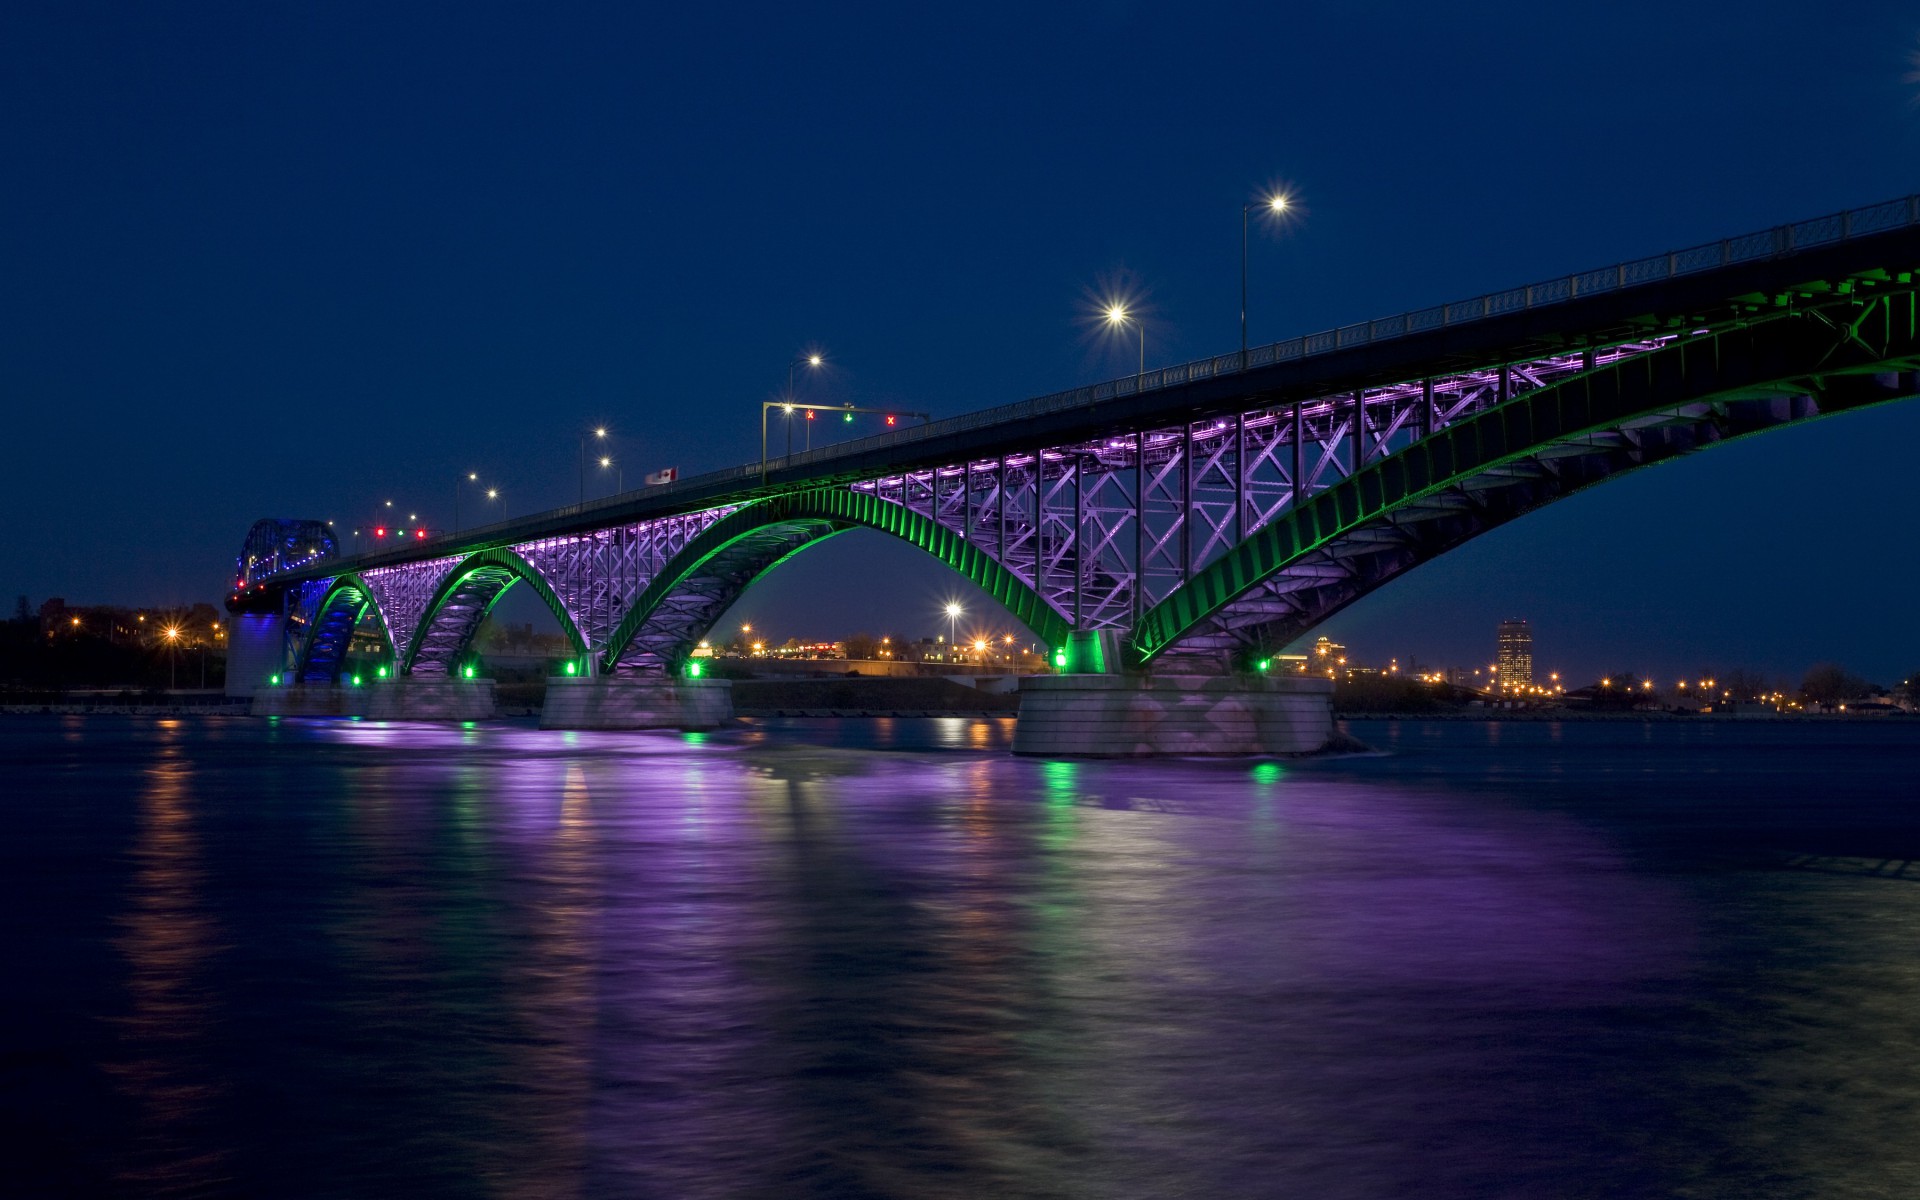 A large illuminated bridge over the river at night